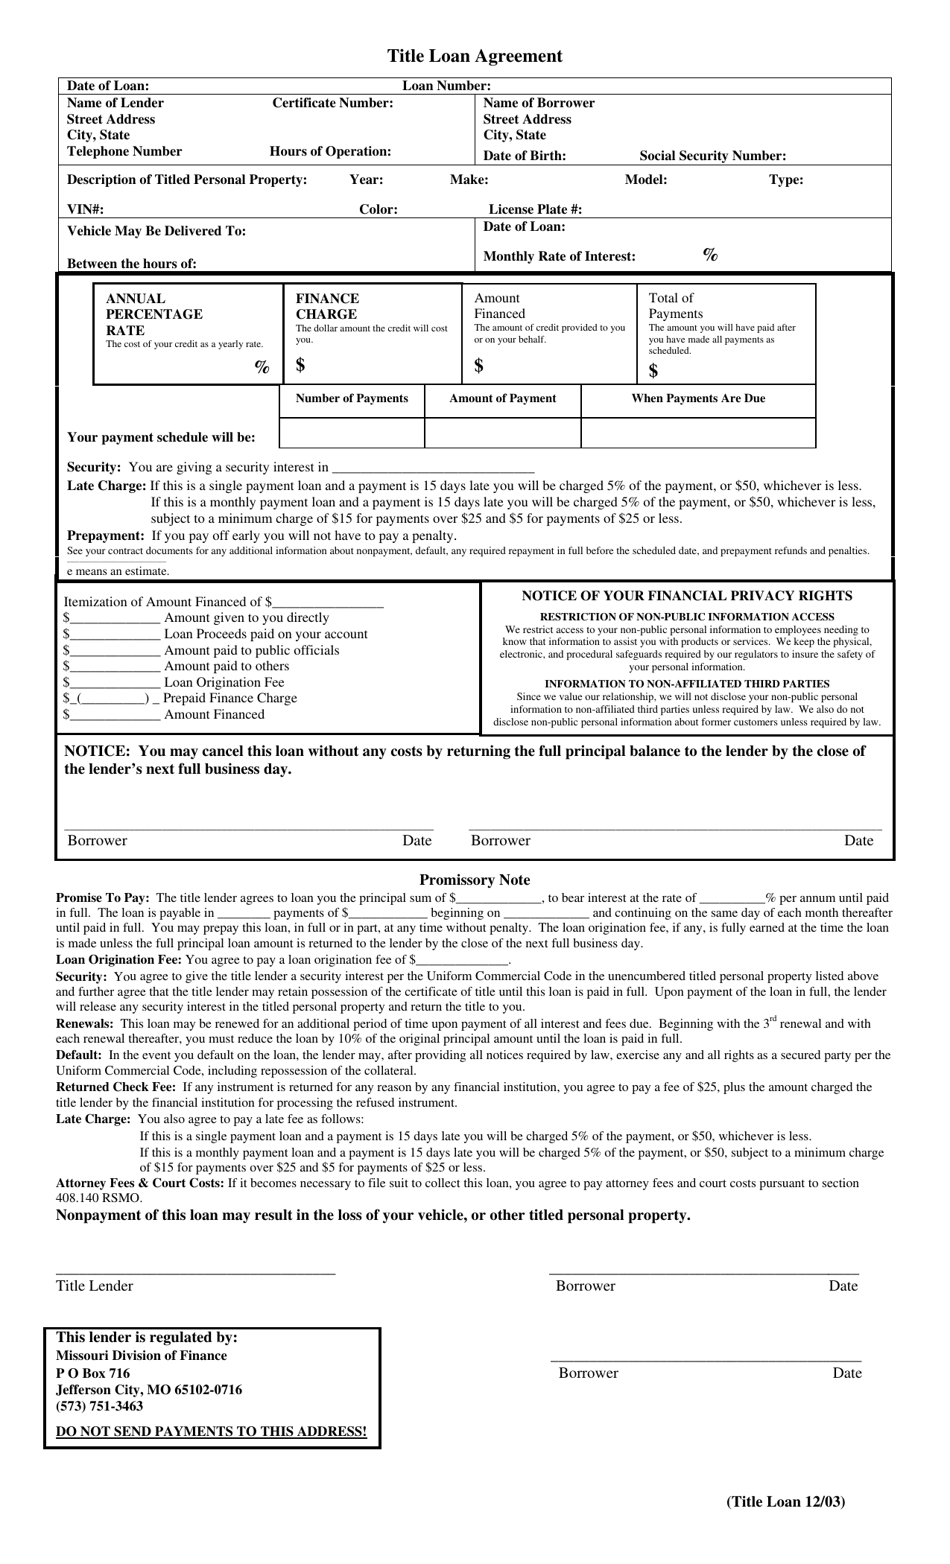 Title Loan Agreement - Missouri, Page 1